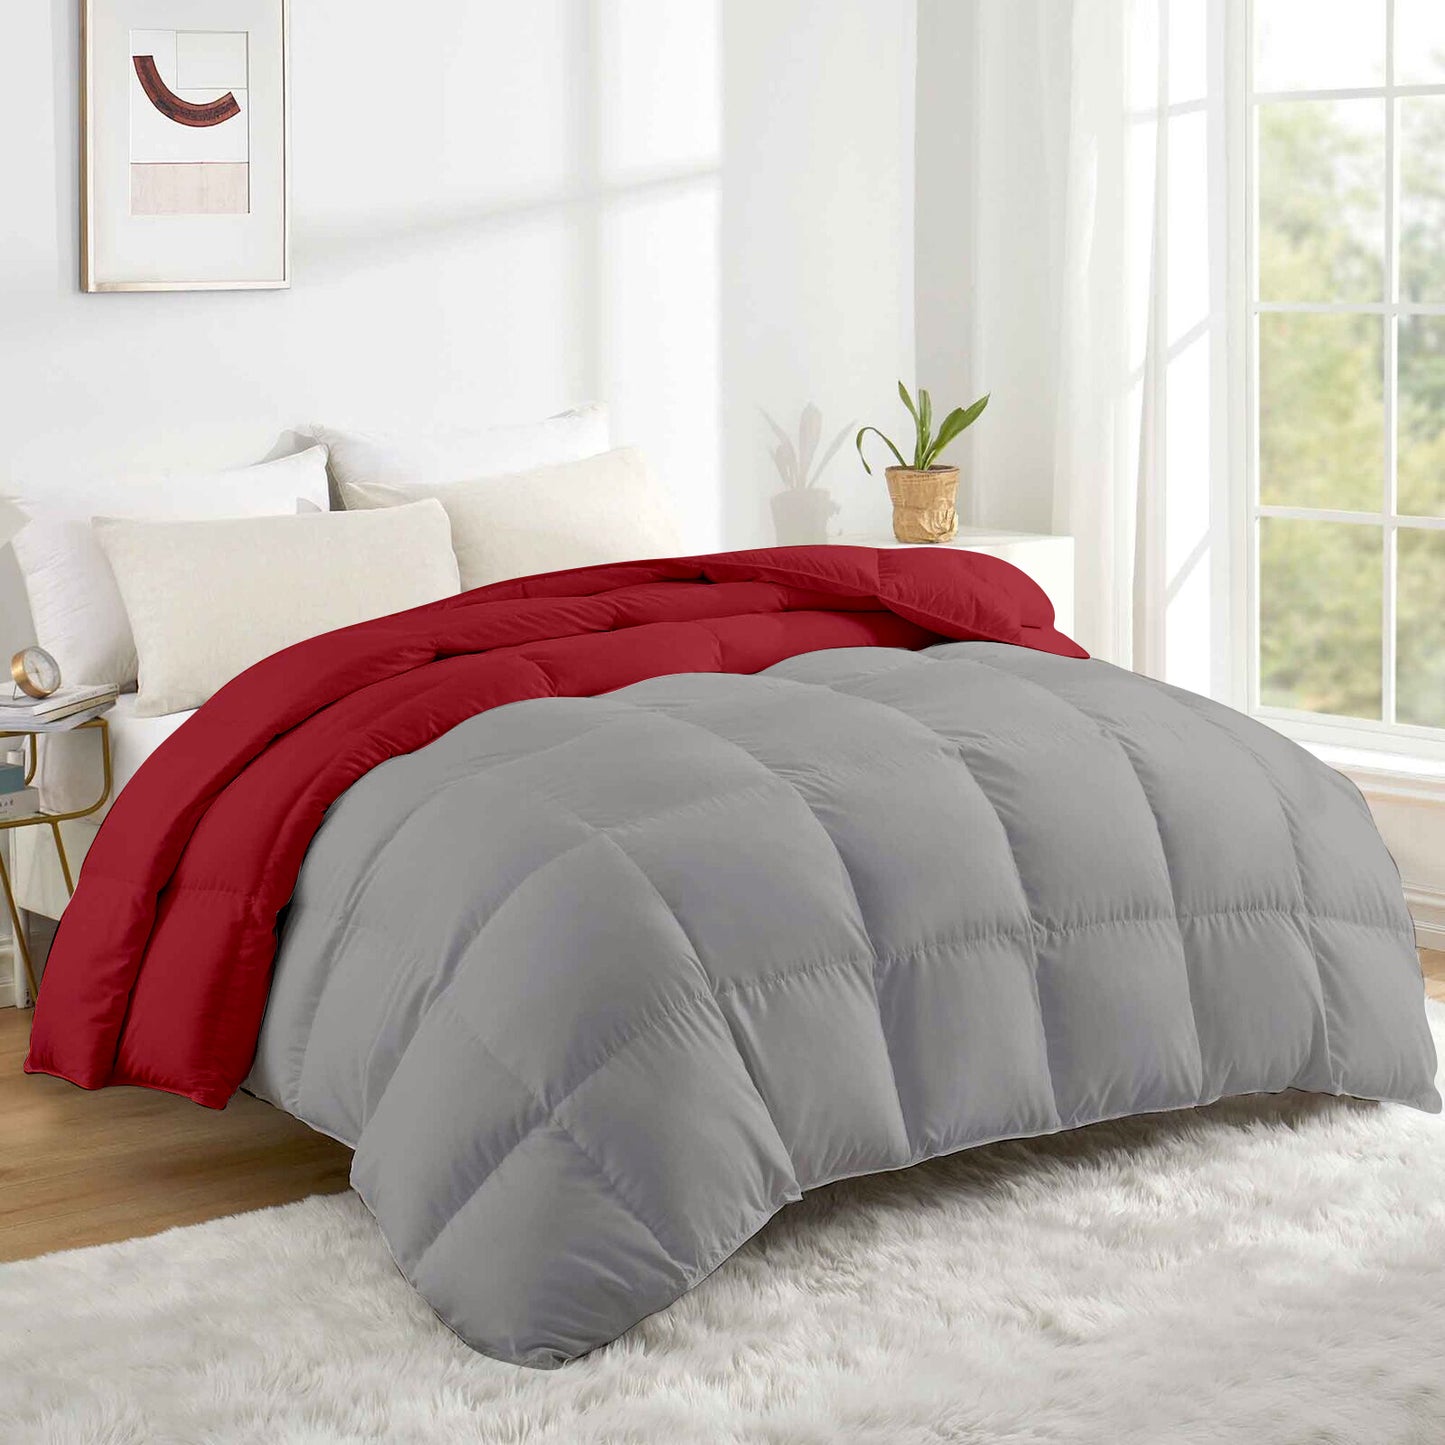 Razzai - 500 GSM Soft Hotel Quality-Down Alternative Reversible Comforter/Microfiber Quilt Blanket |Silver/Burgundy